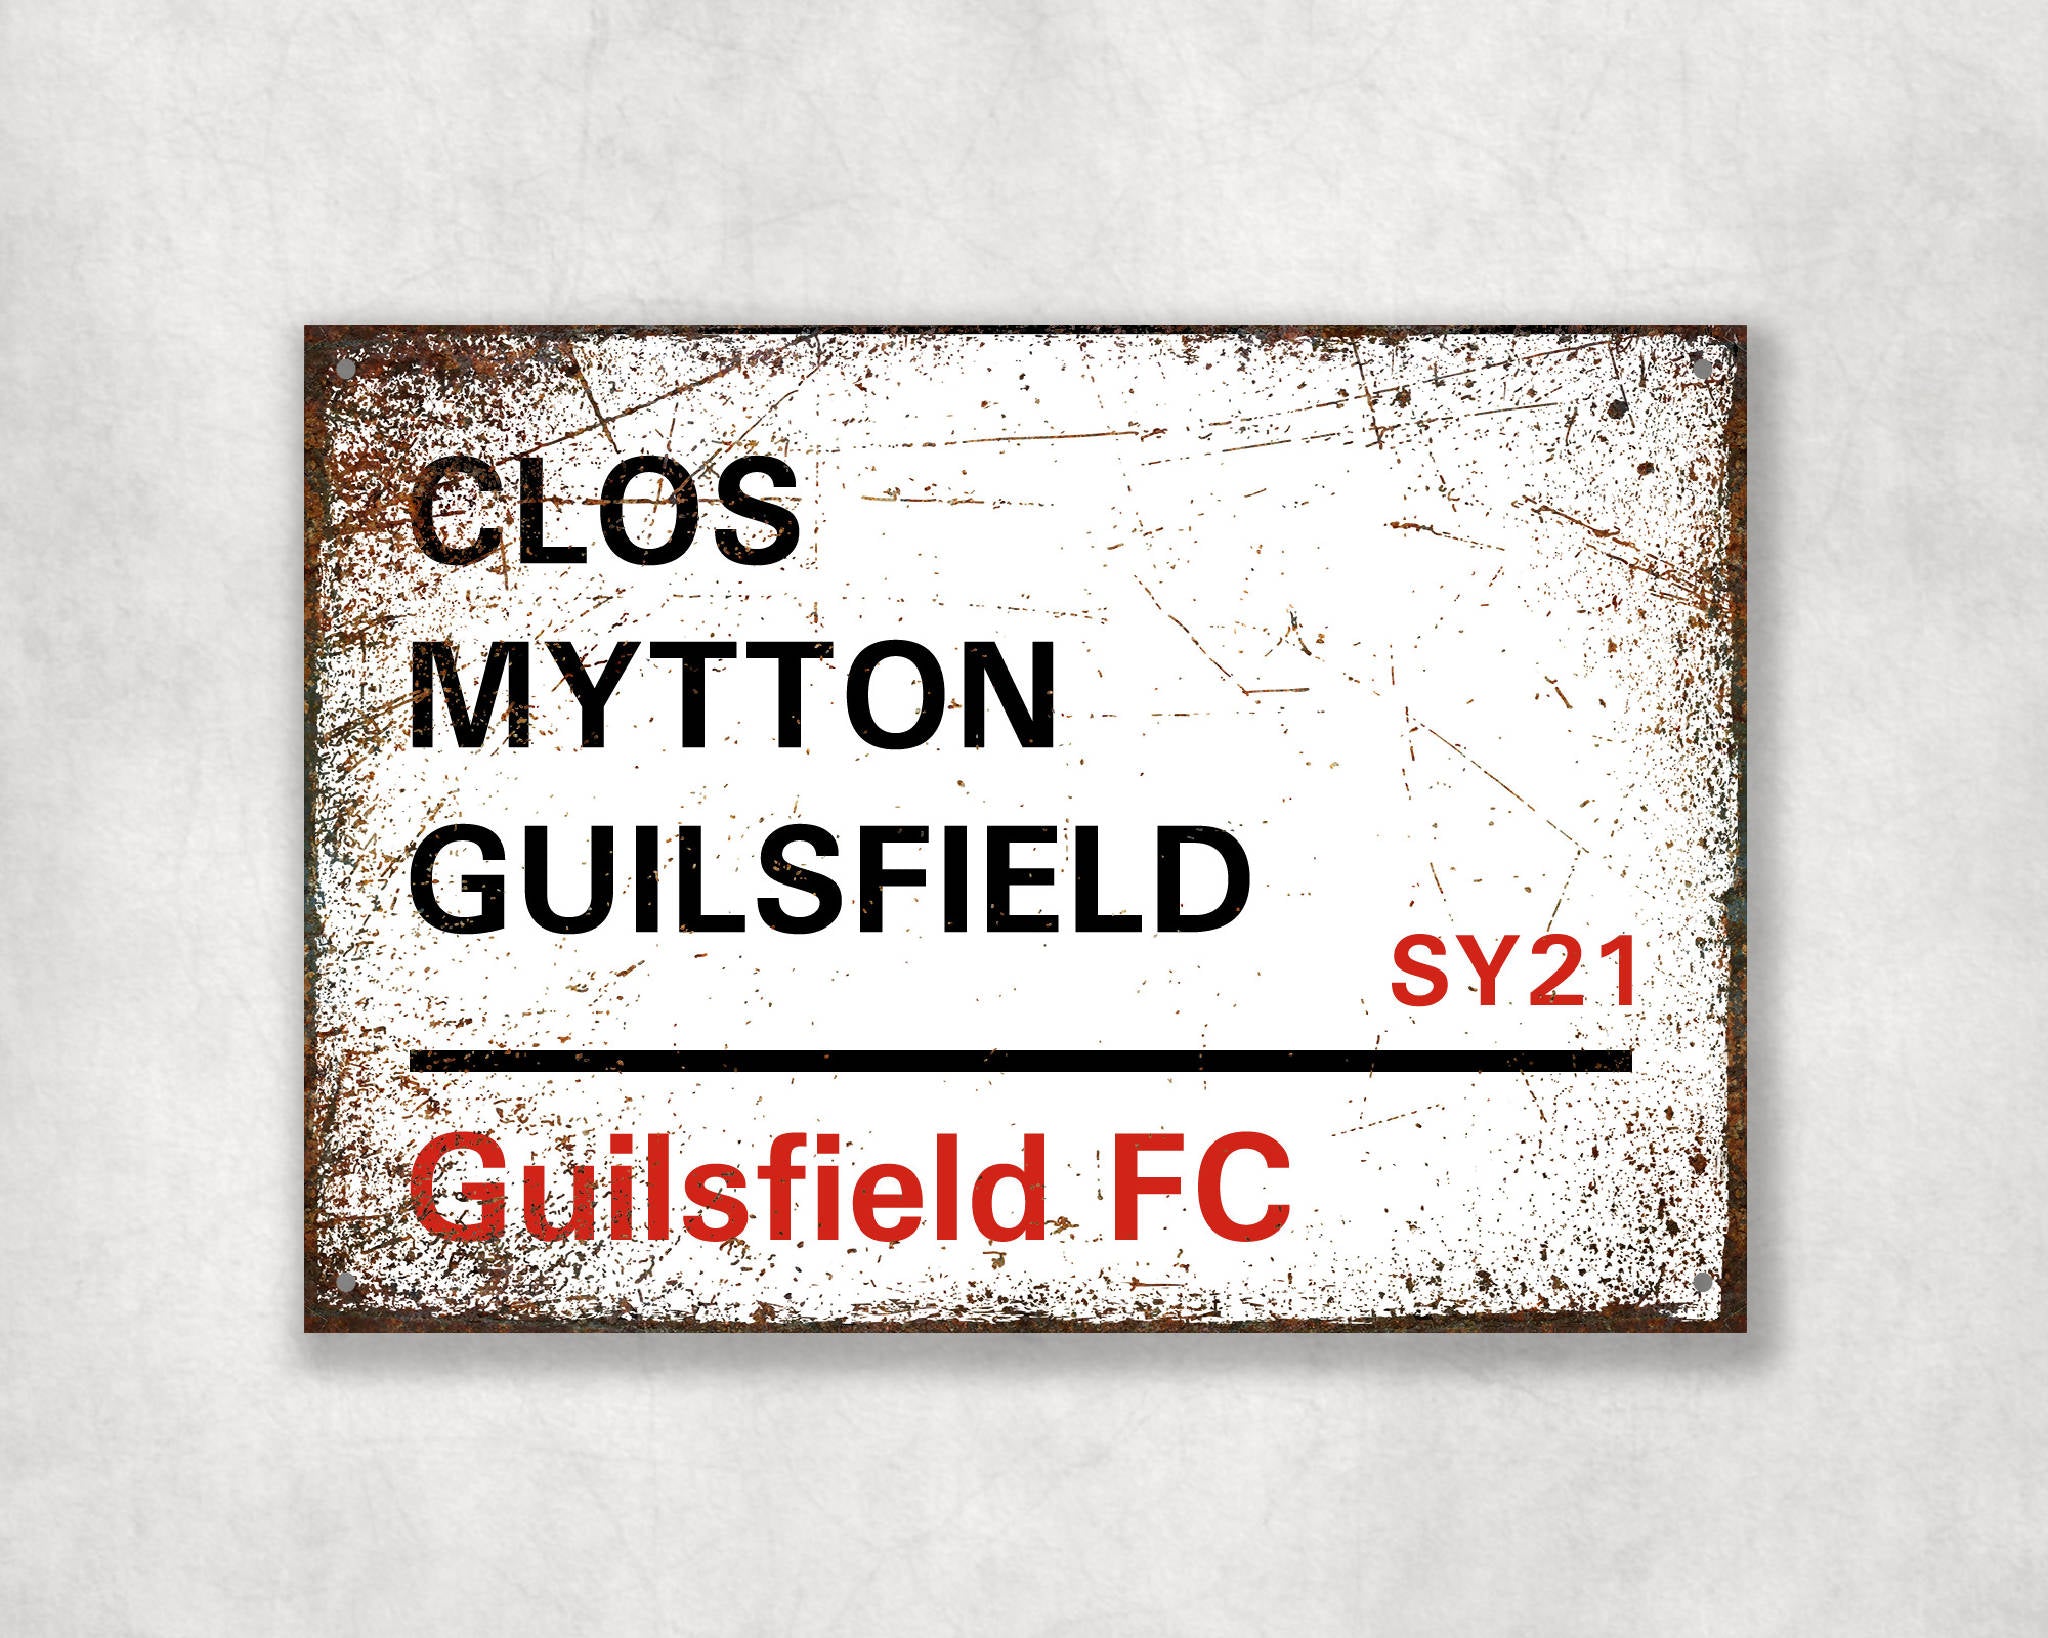 Clos Mytton Guilsfield - Guilsfield FC aluminium printed metal street sign - gift, keepsake, football gift